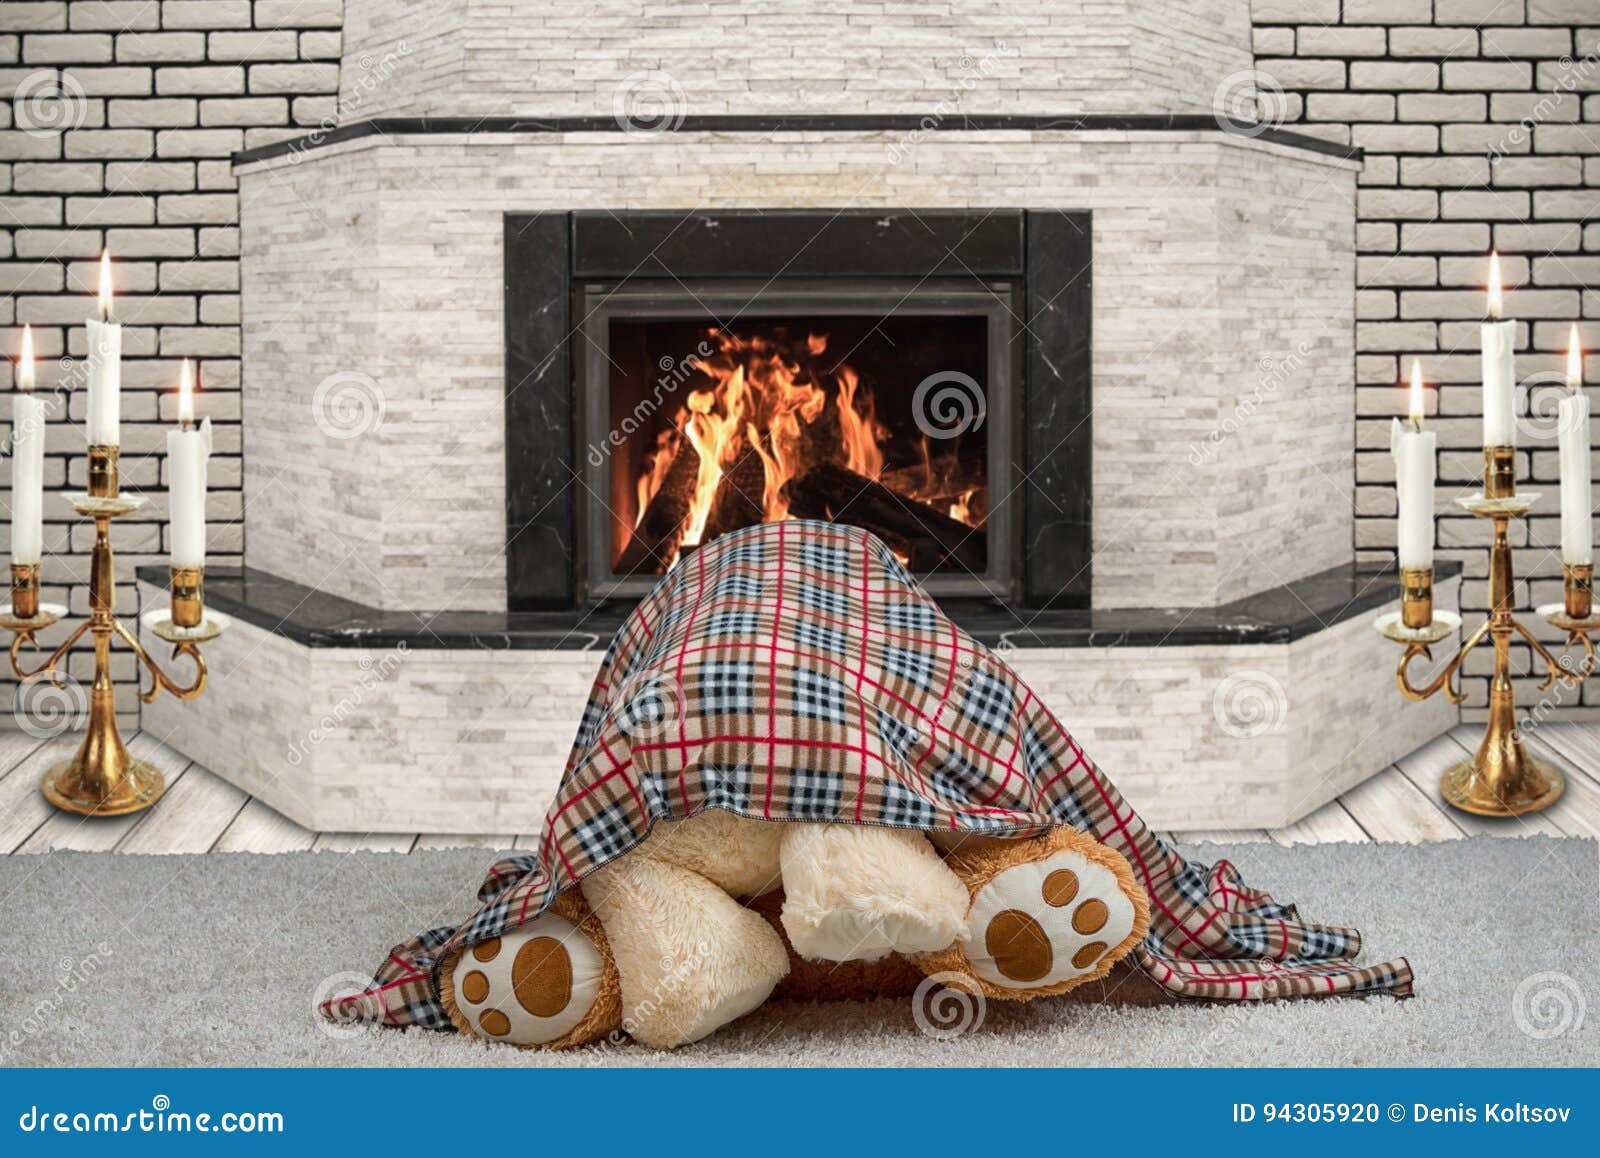 153 Romantic Couple Fireplace Blanket Stock Photos - Free